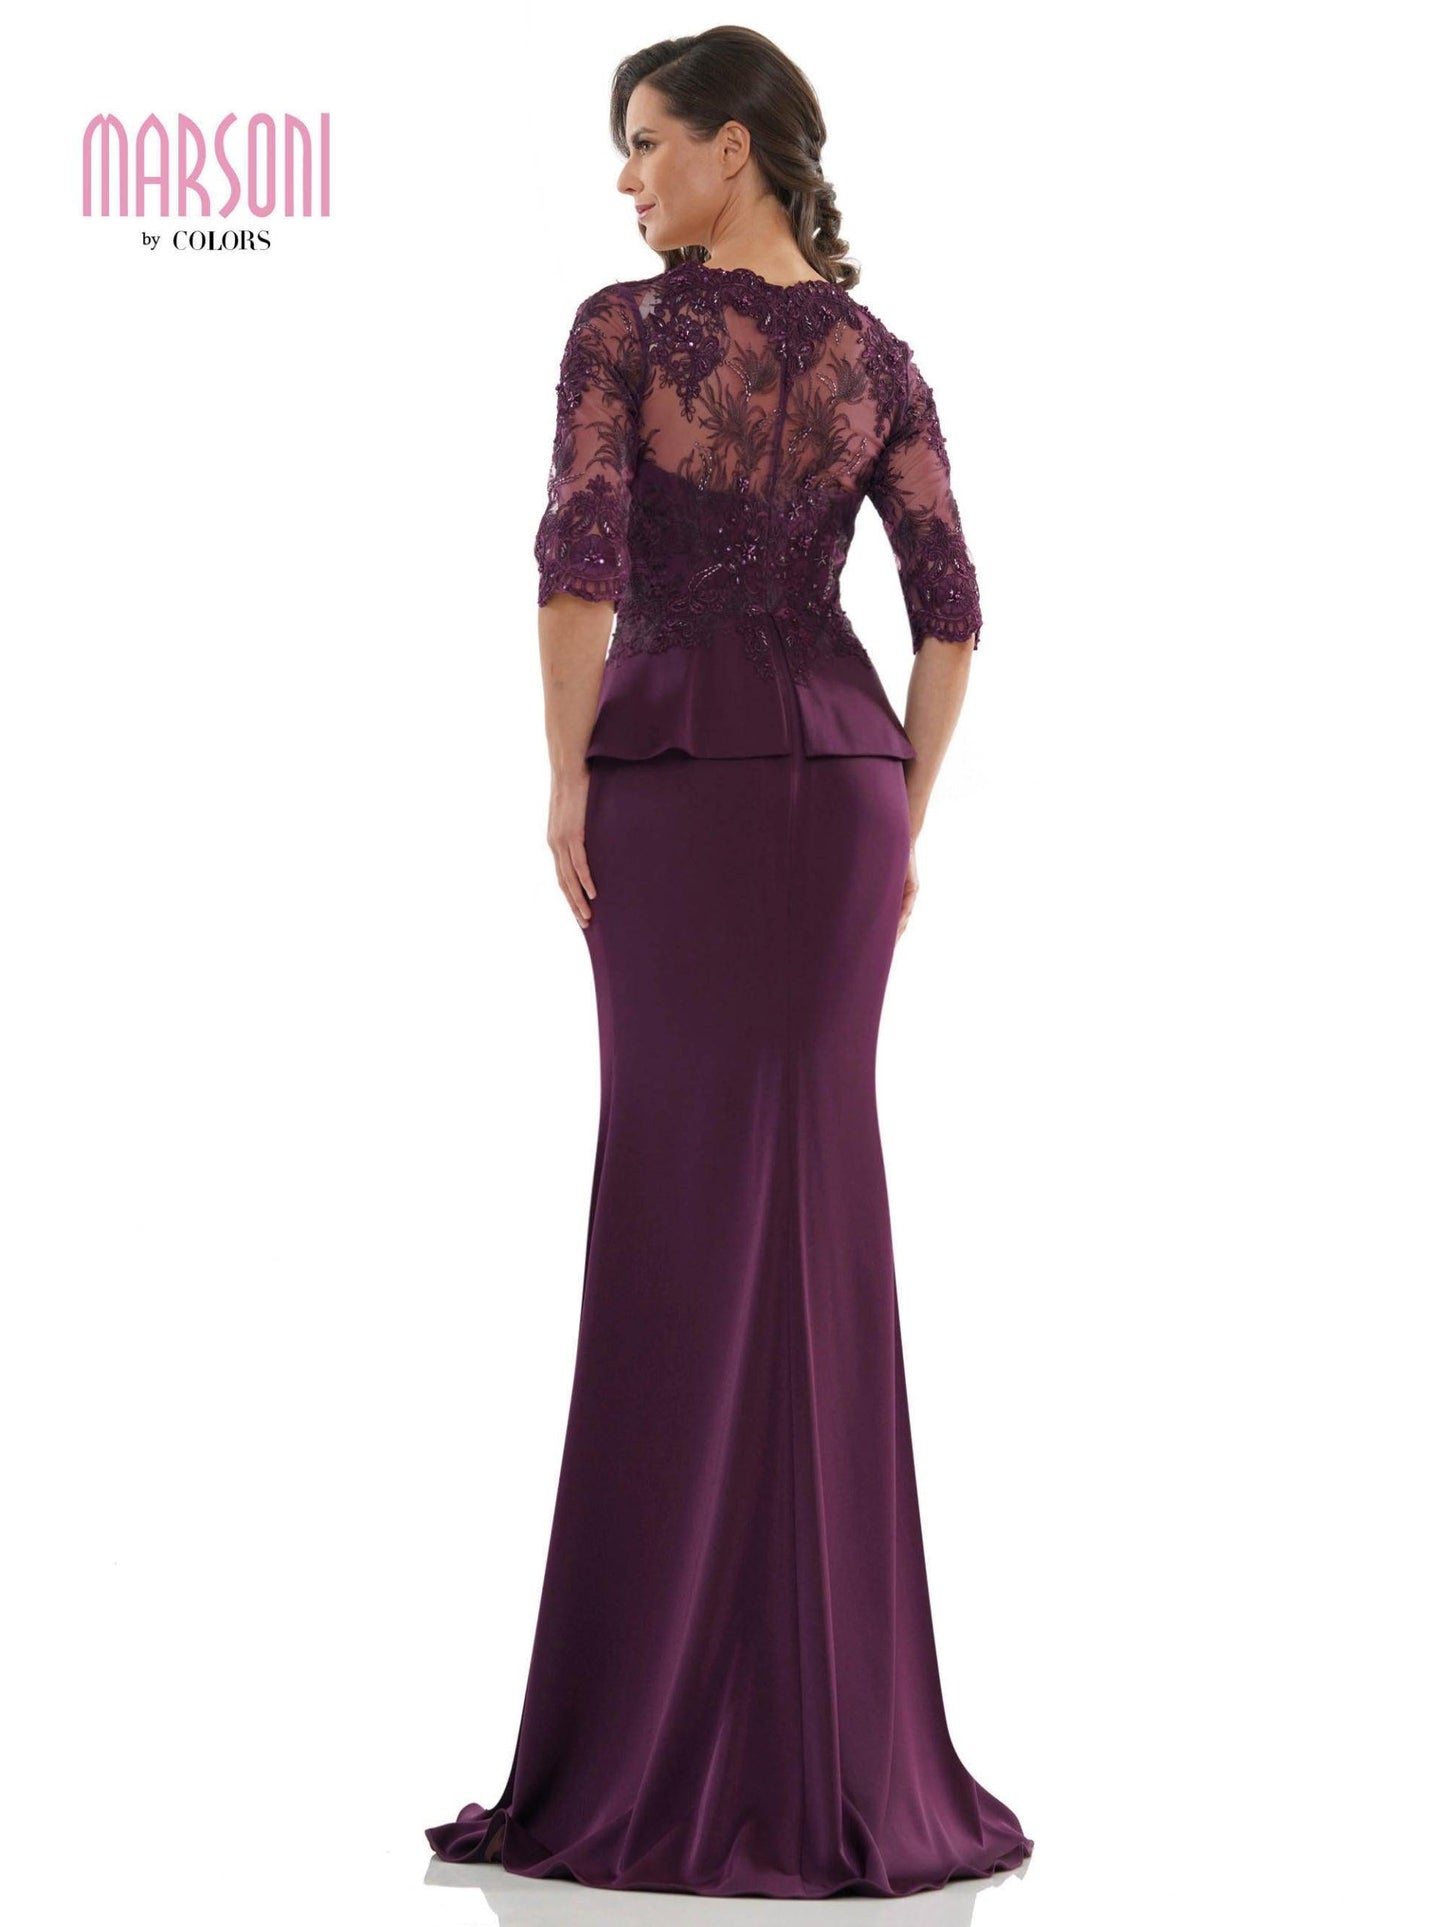 Rina di Montella Peplum Style Long Dress 2685 - The Dress Outlet